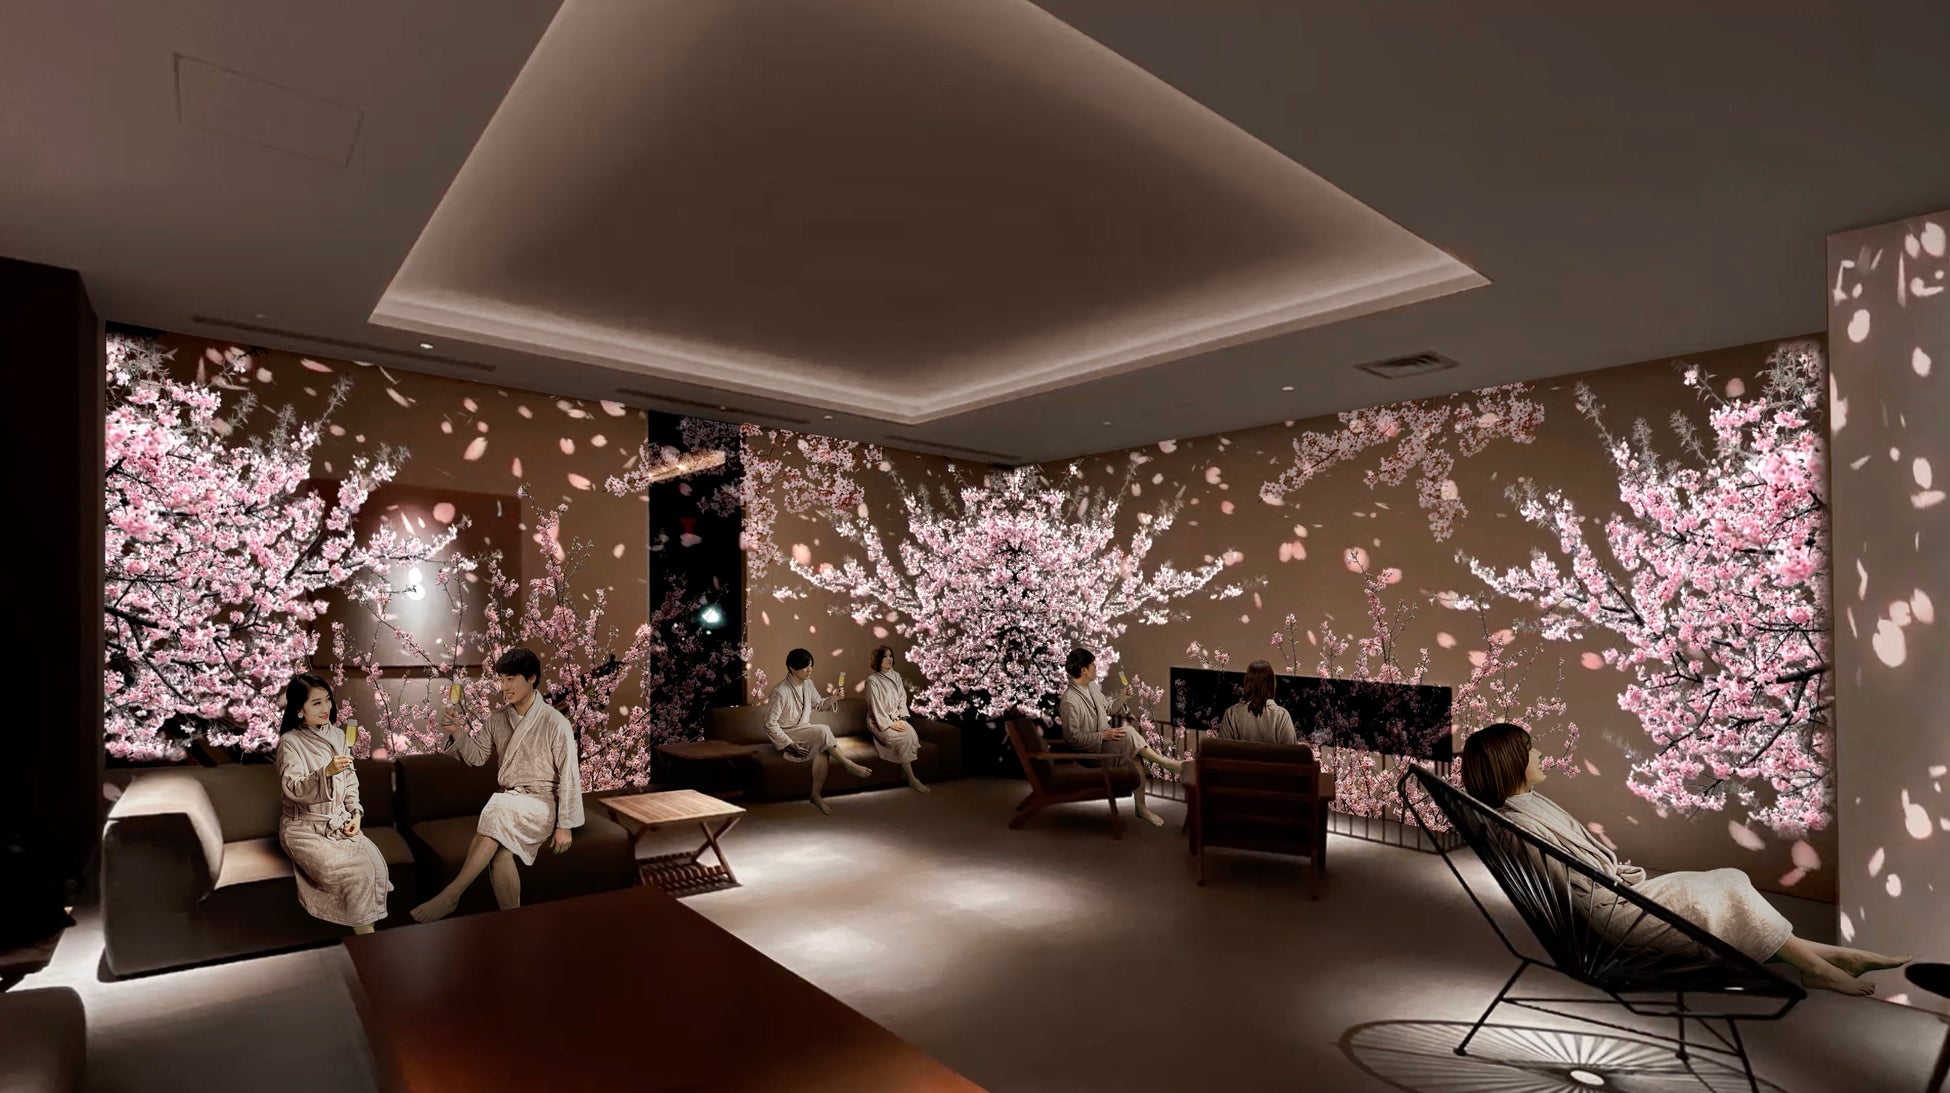 「abrAsus hotel Fuji」が「豚組」とのコラボ料理をスタート！
1日1組限定のプライベートホテルで、最上級の体験を。